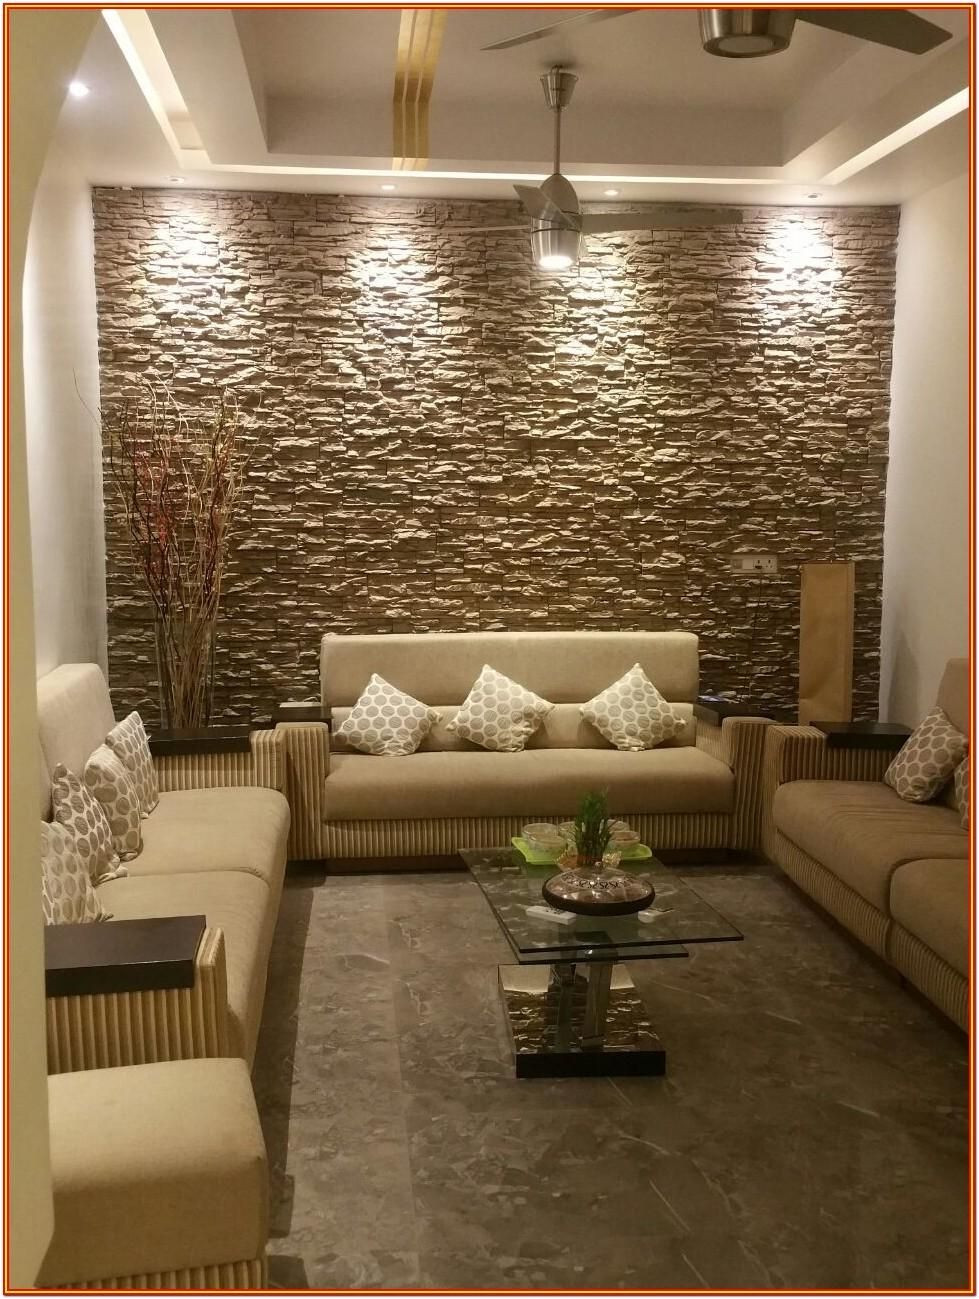 Decorative Wall Tiles Living Room
 Decorative Wall Tiles Living Room India by Lori Morales in